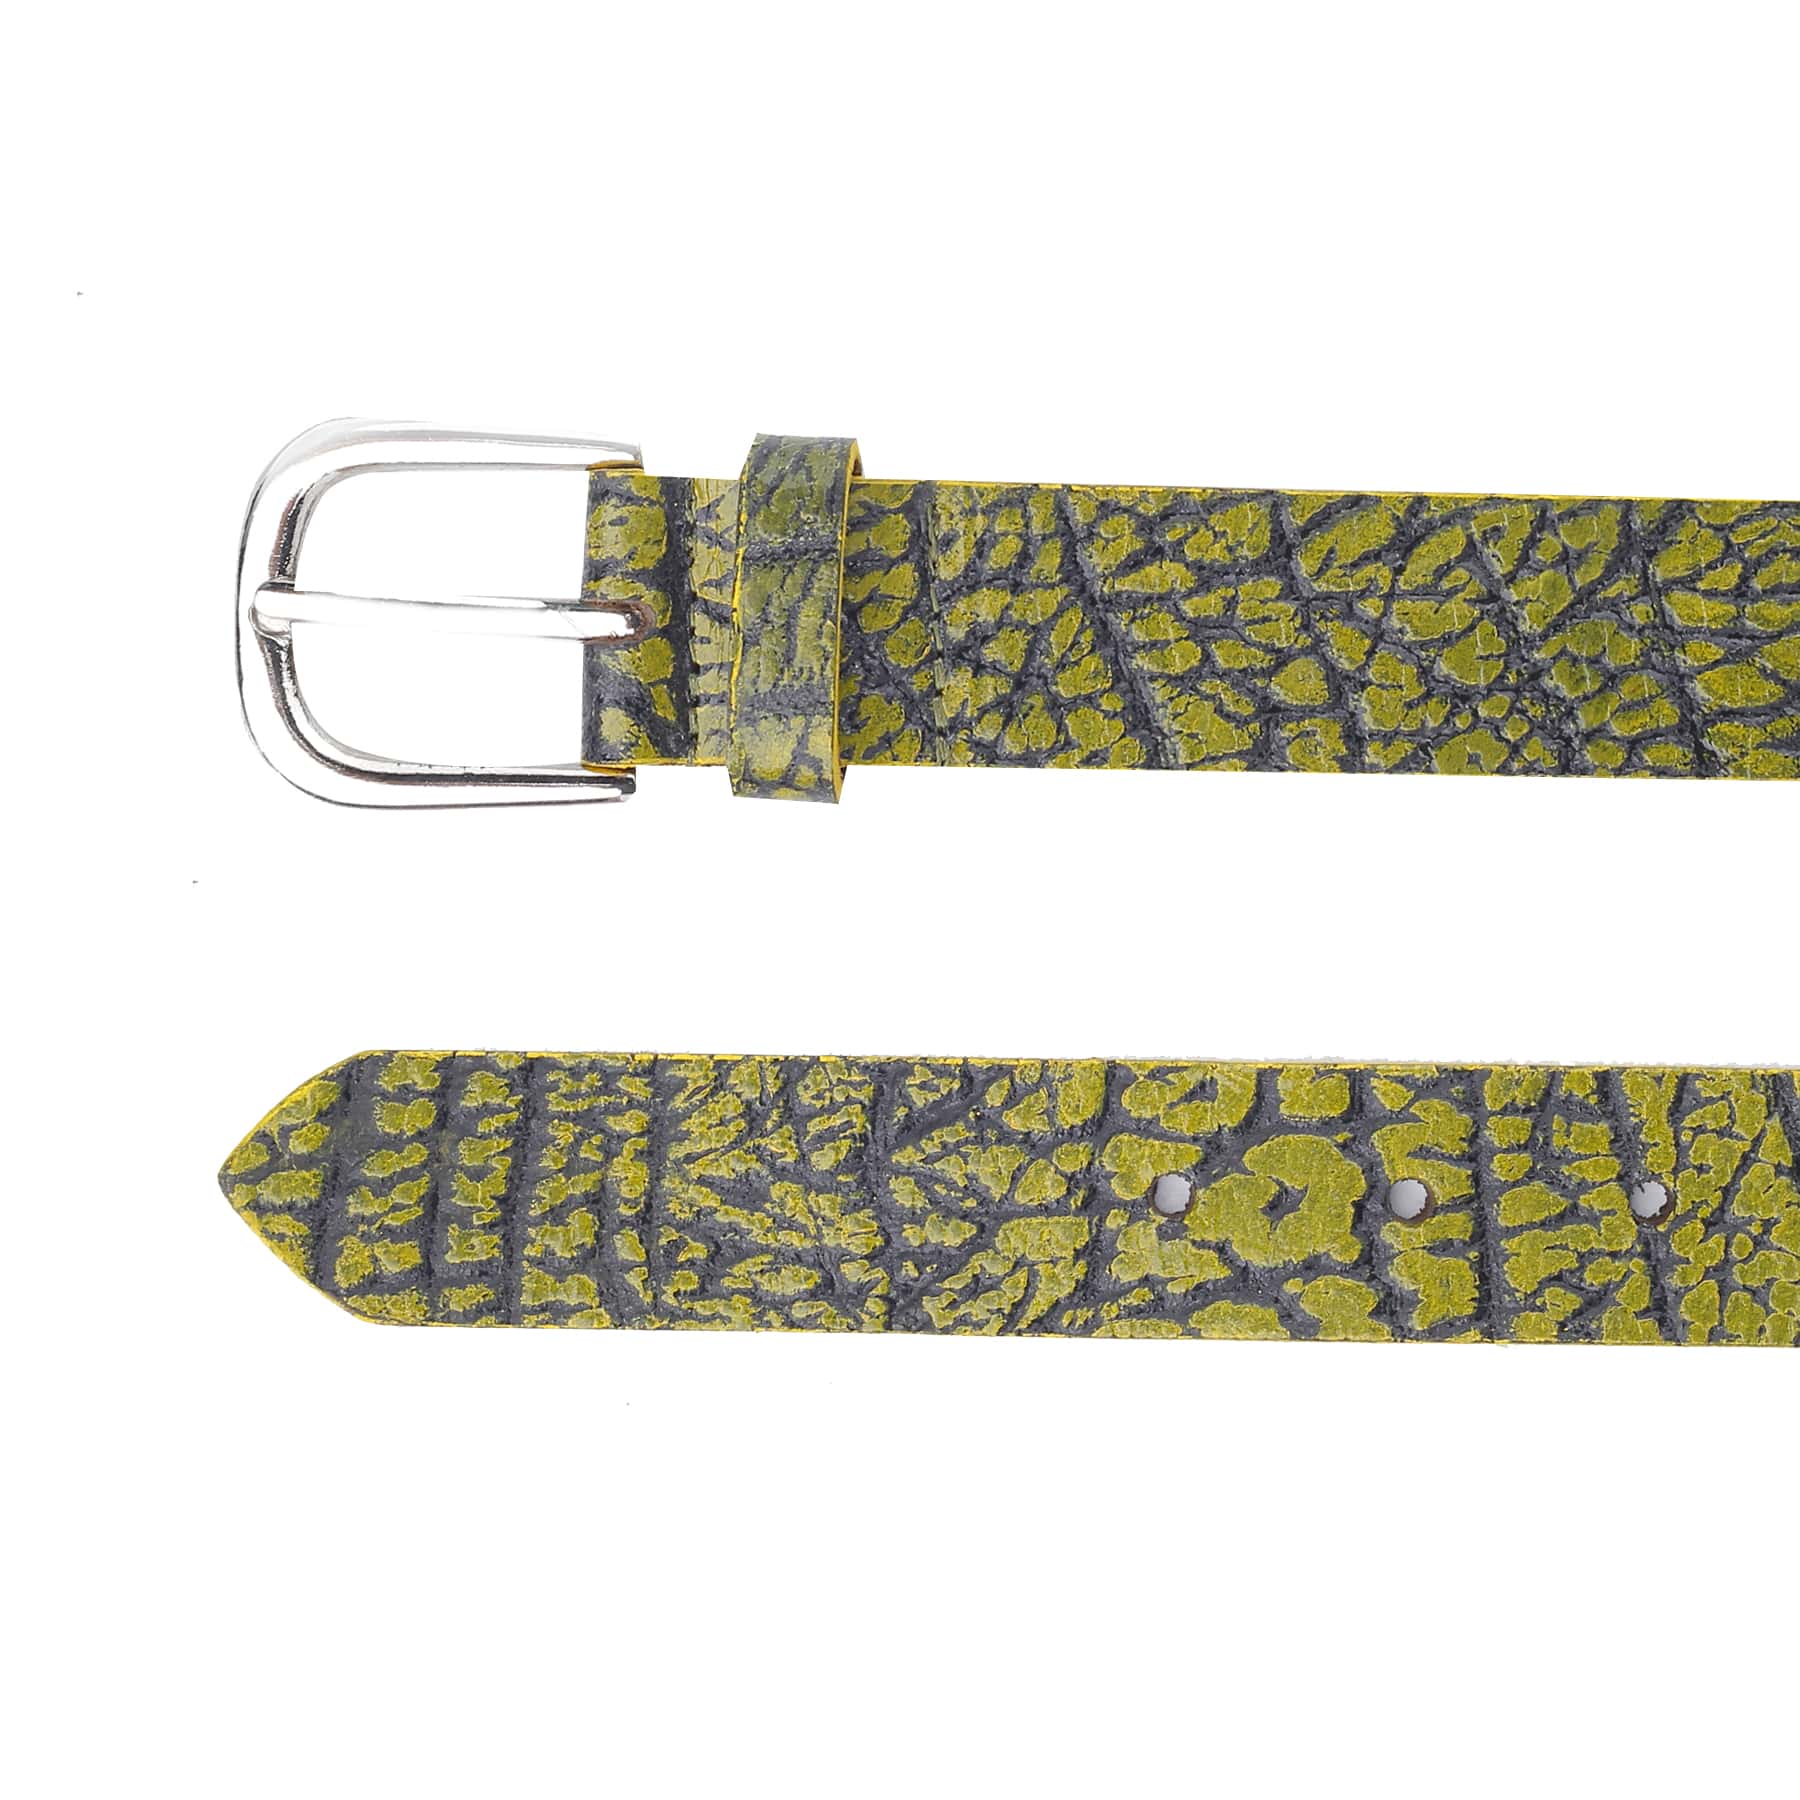 Bacca Bucci 'Aurelia Virentis' Elite Series: Women’s Textured Genuine Leather Belt with Artisanal Pattern, Ideal for Stylish Cinching and Versatile Fashion Pairing